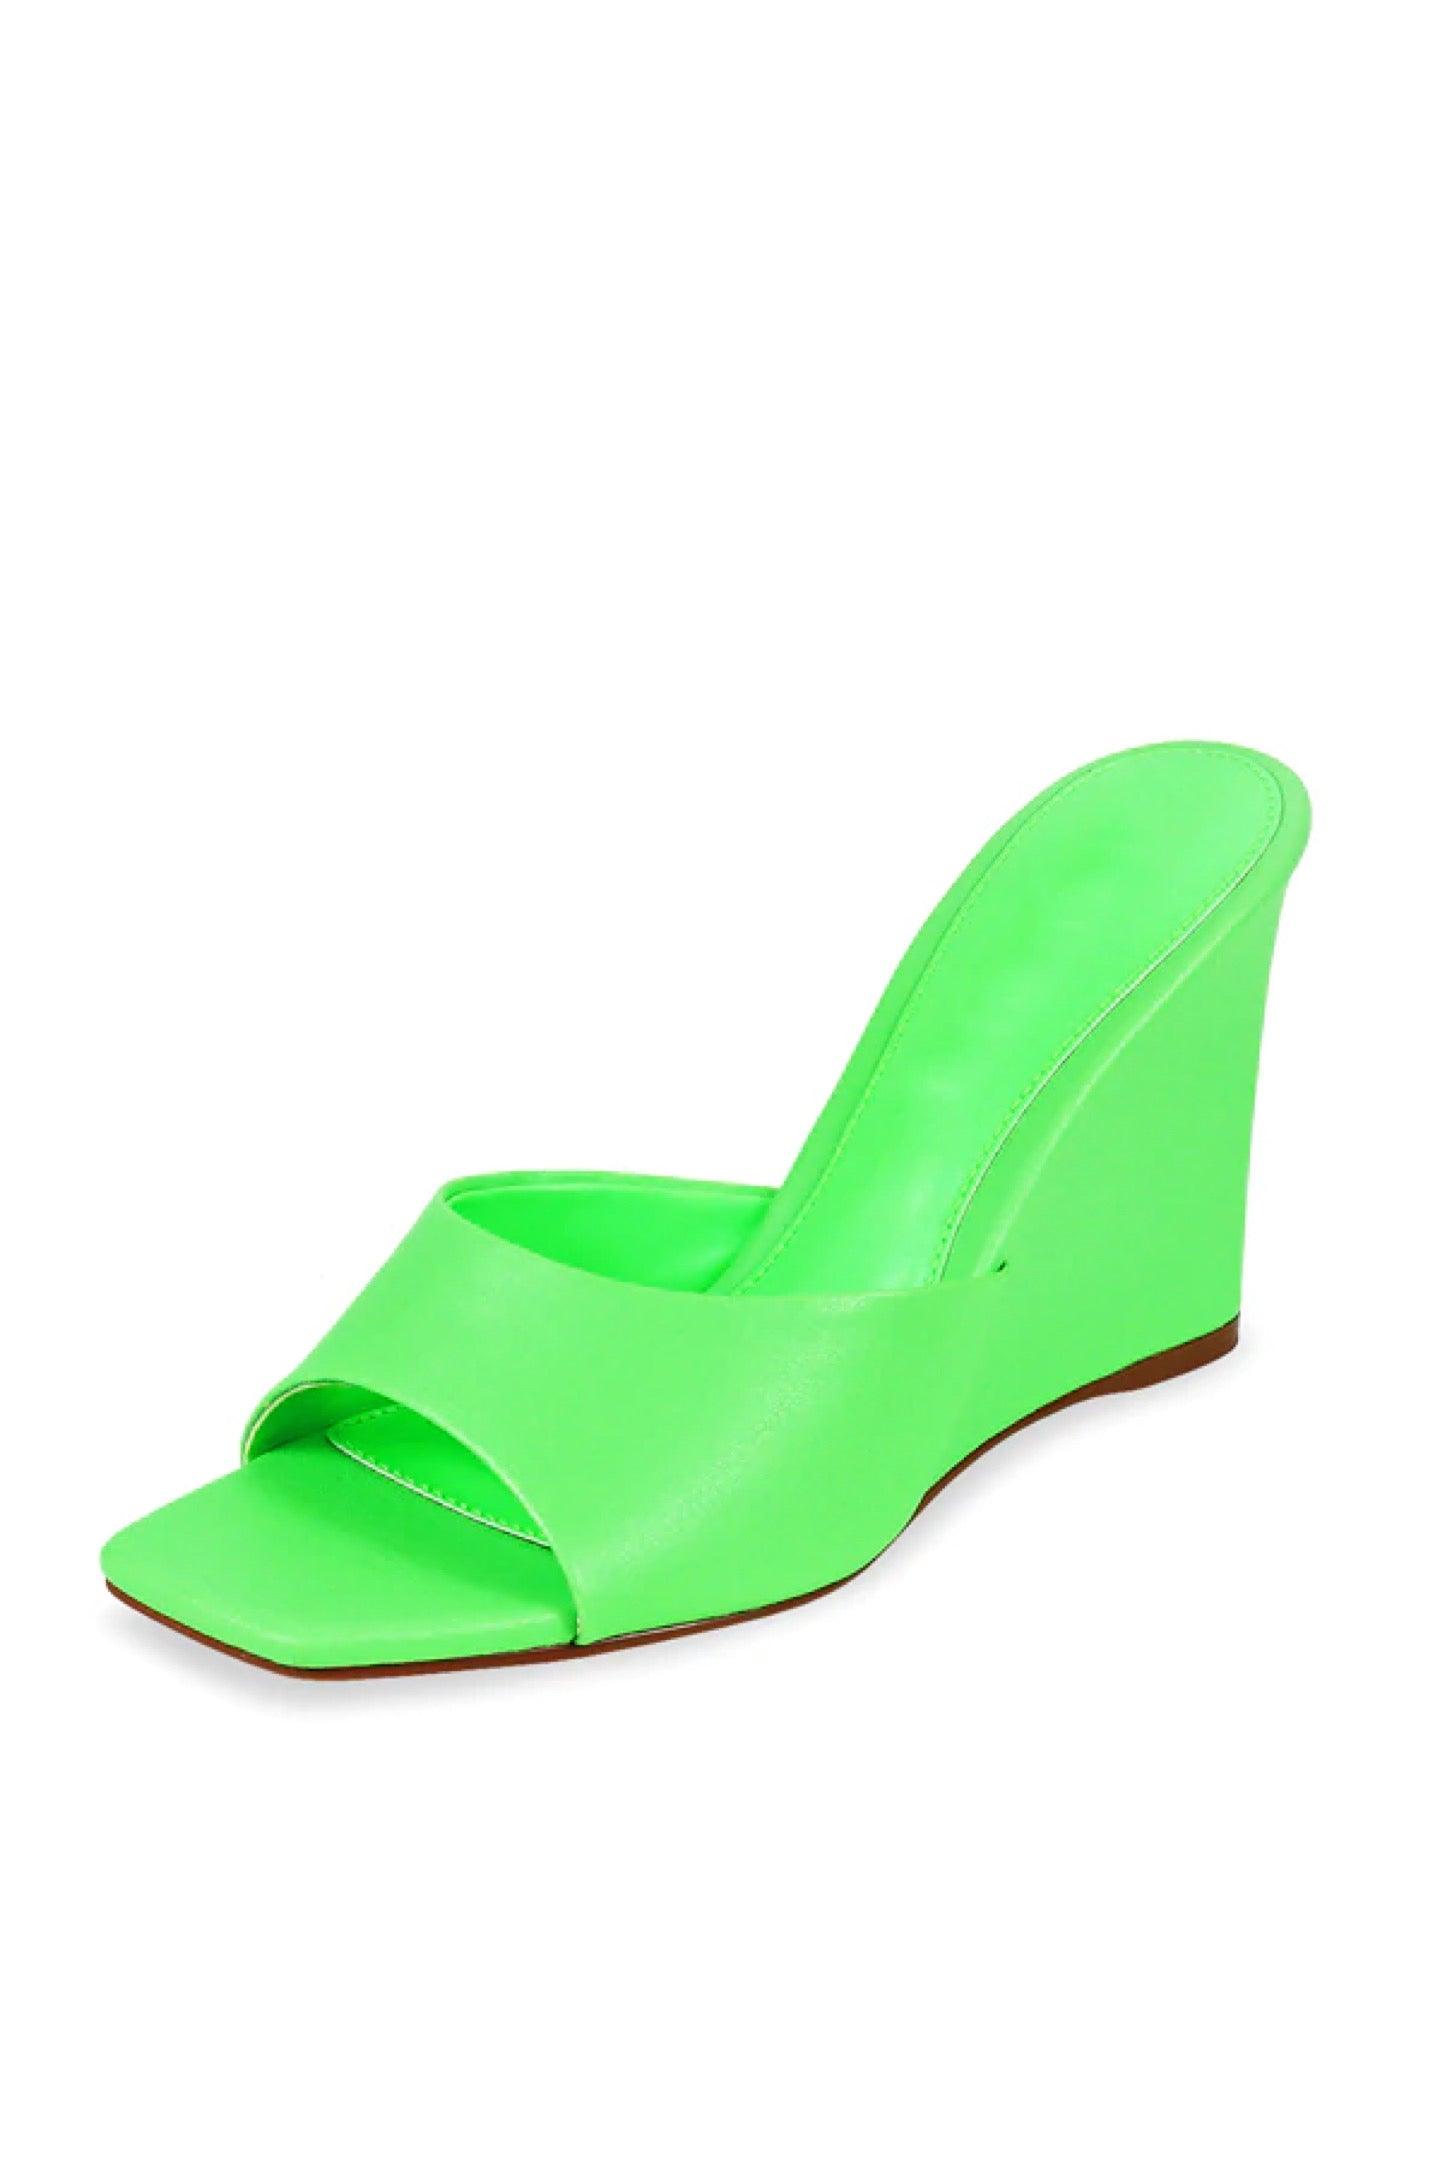 Neon Green Wedge Sandal - Size 8